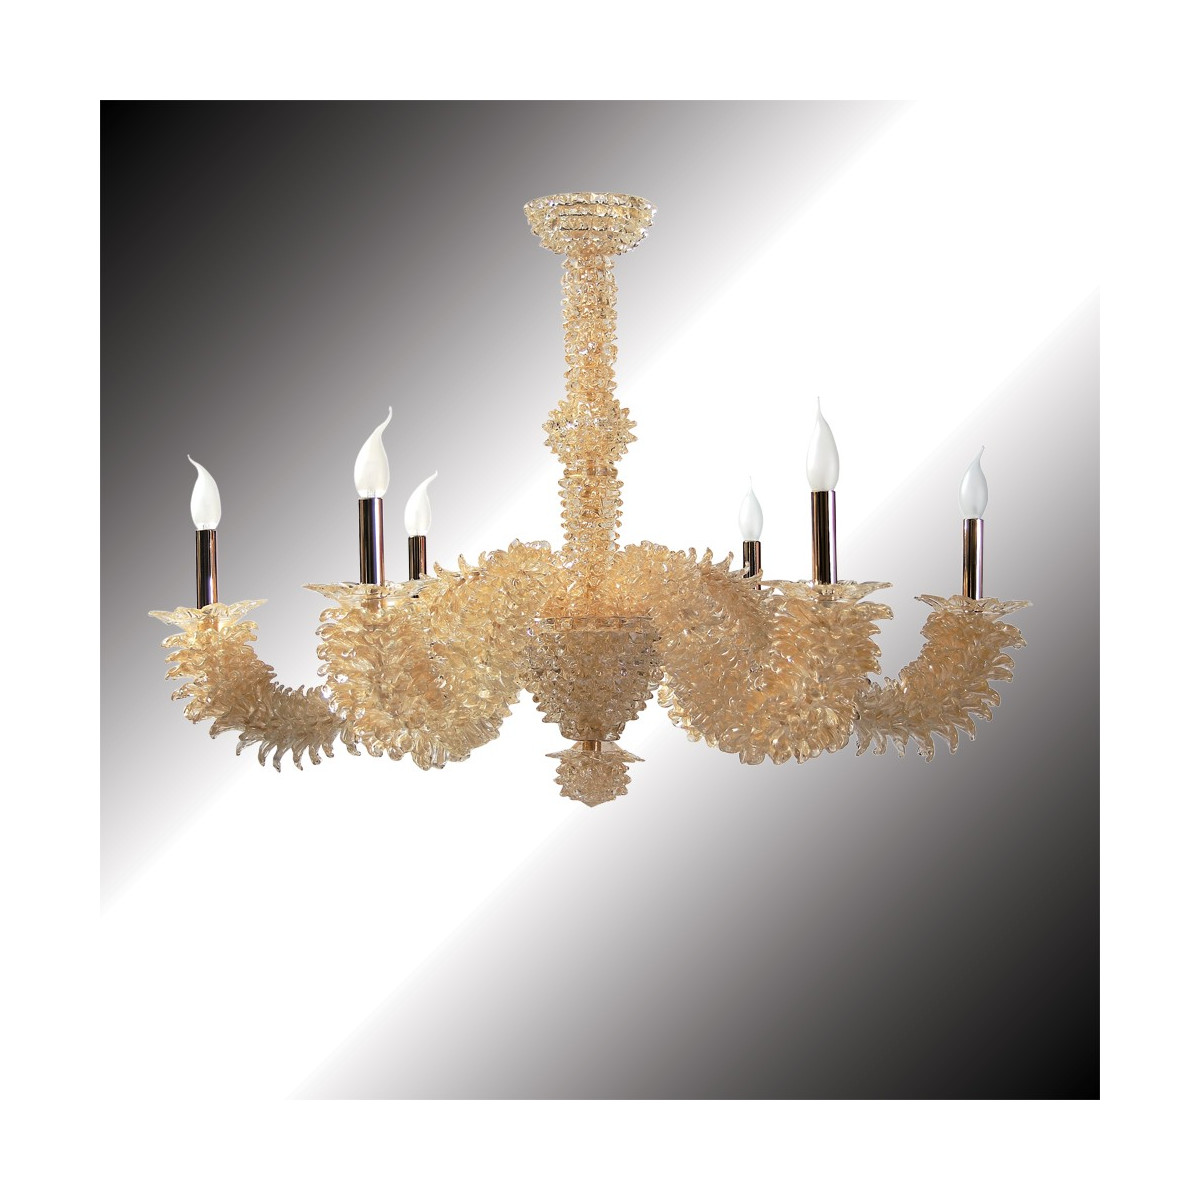 "Narciso" 6 lights 24K gold Murano glass chandelier